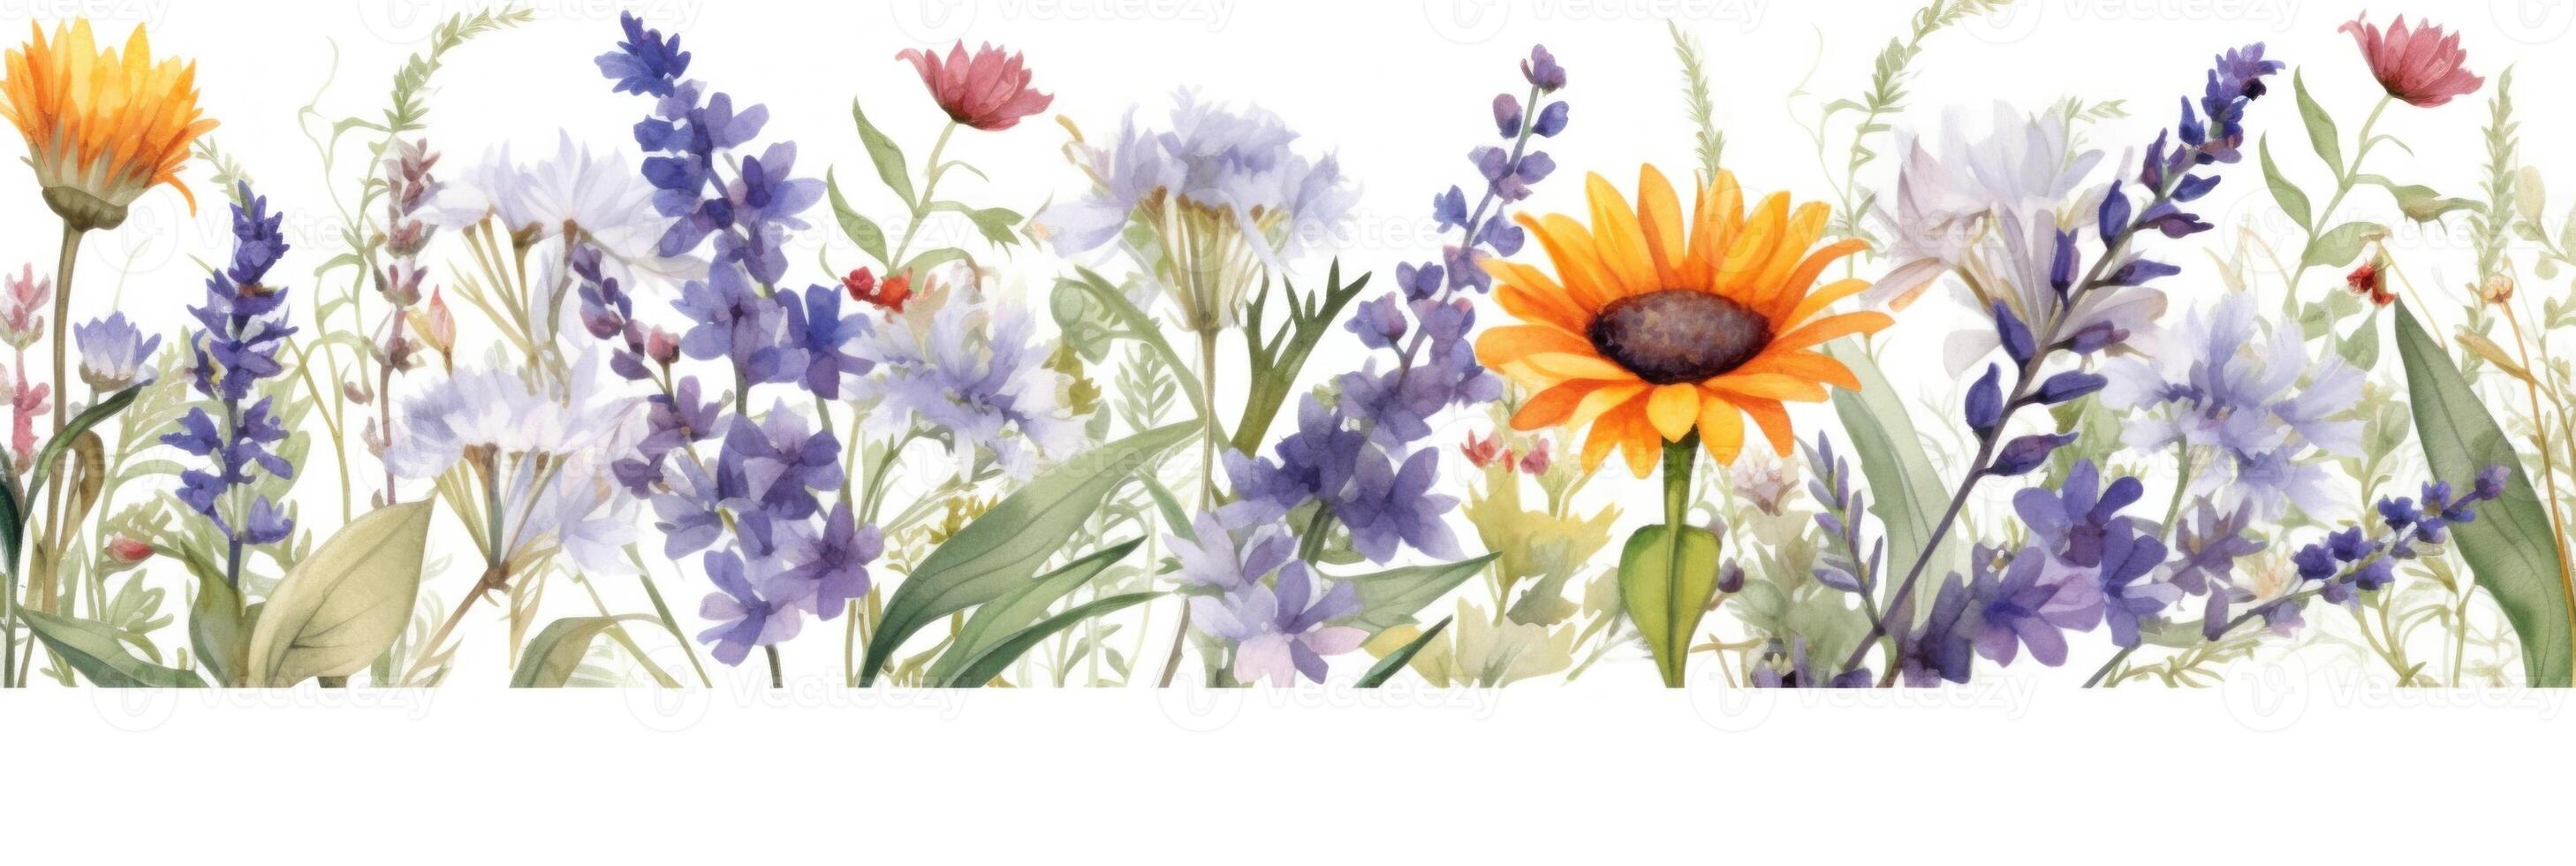 Watercolor floral border. Illustration photo